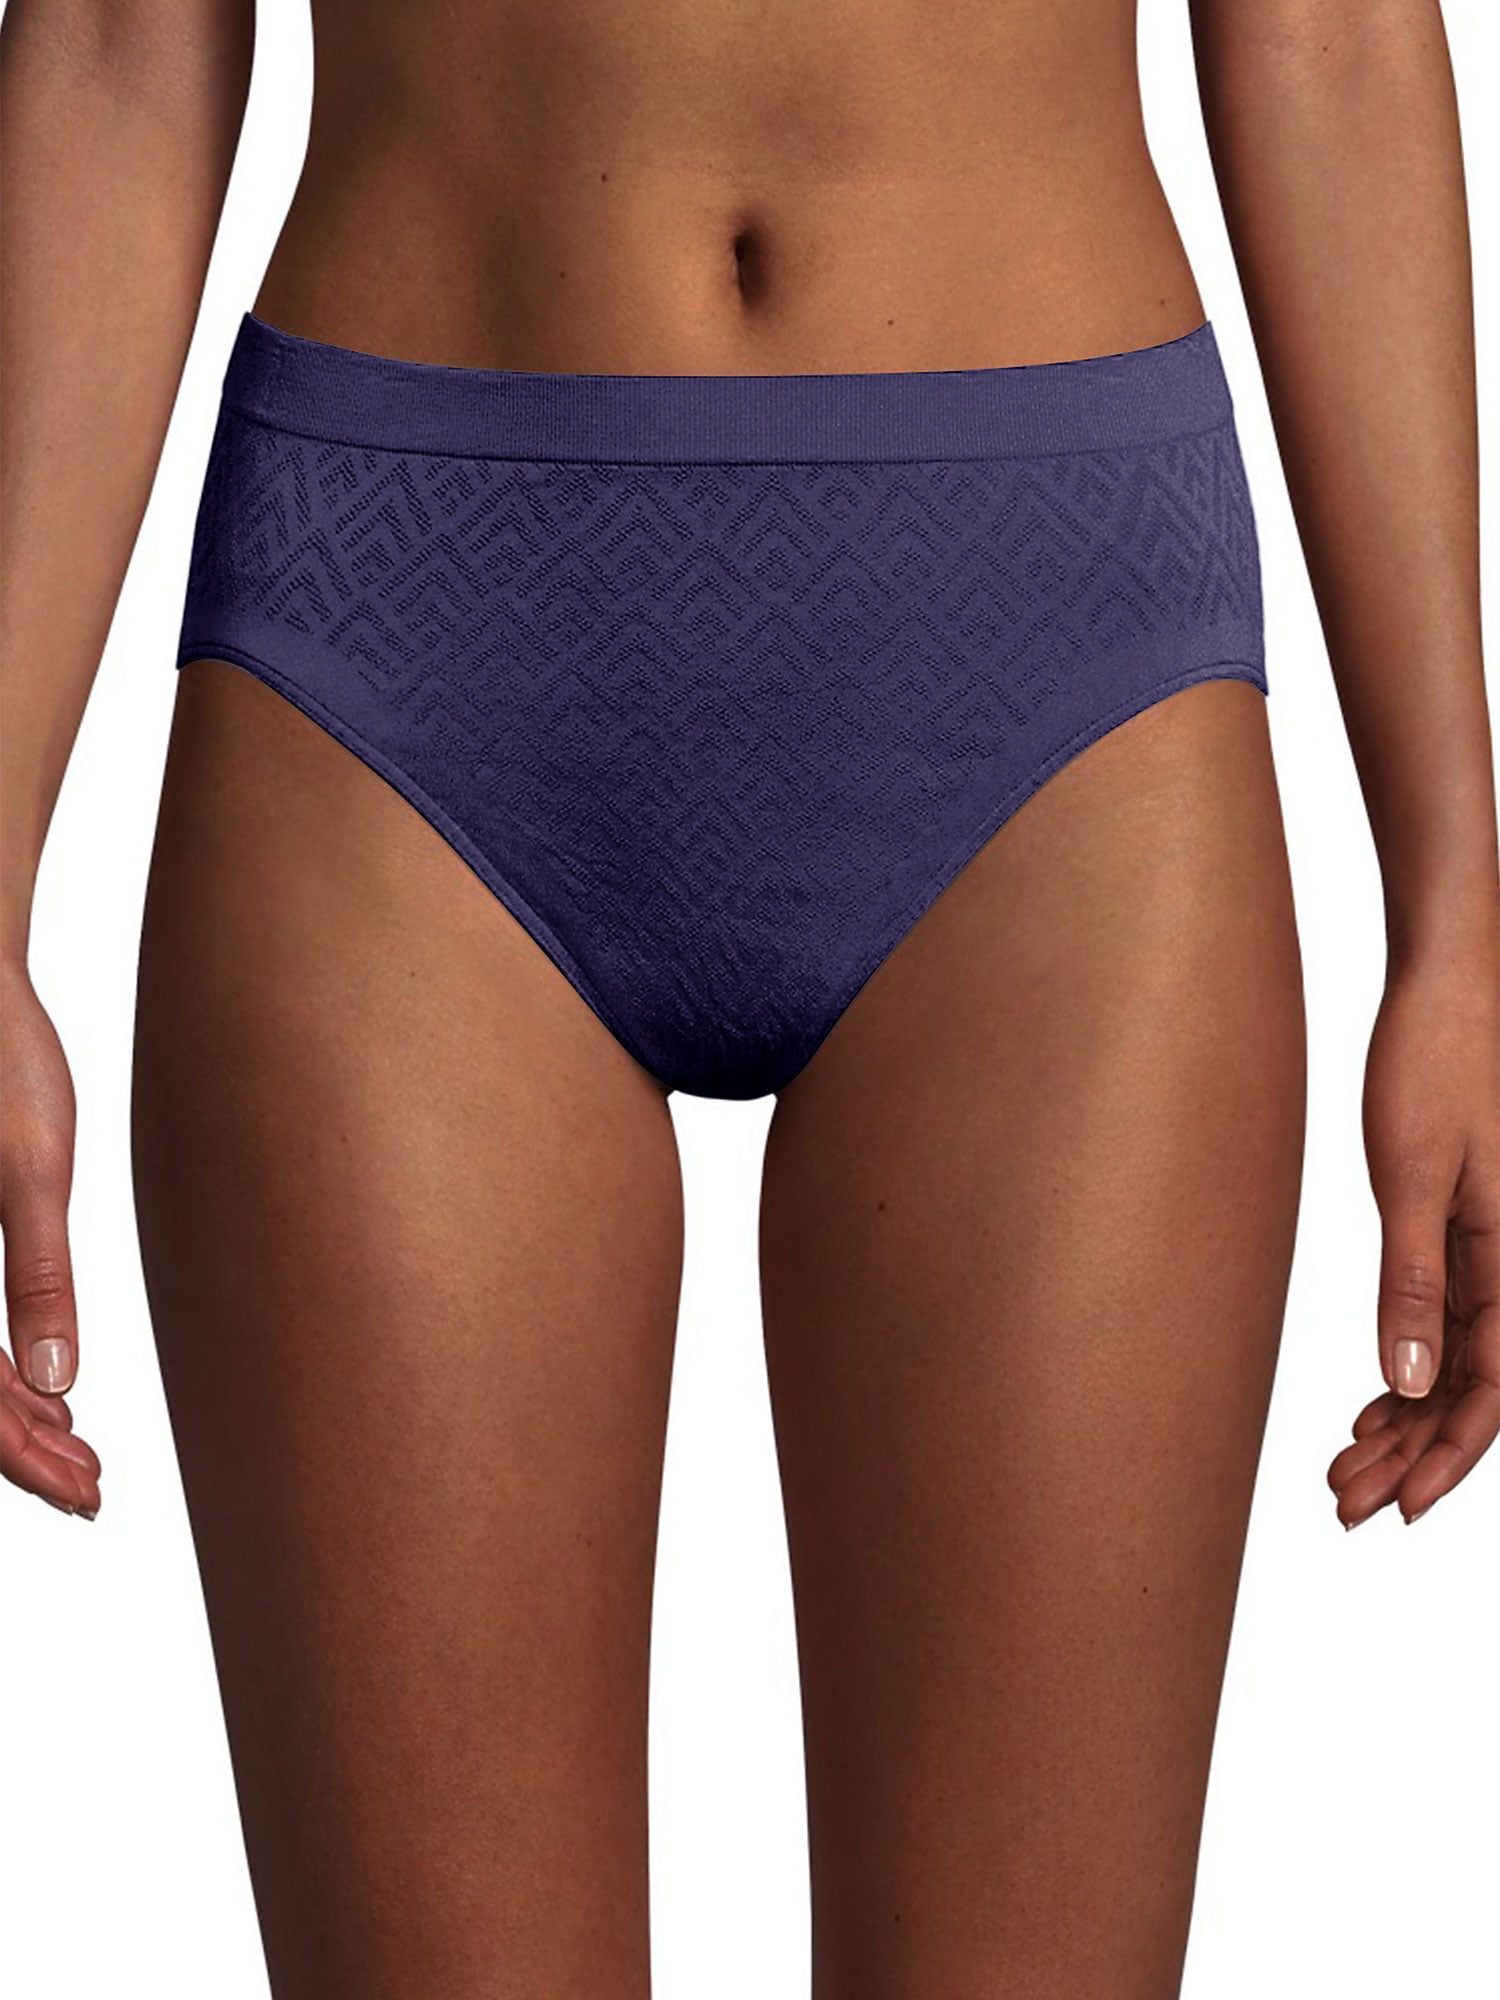 Women's Bali® Comfort Revolution® Easylite® 3-Pack Hi-Cut Panty Set DFELH3